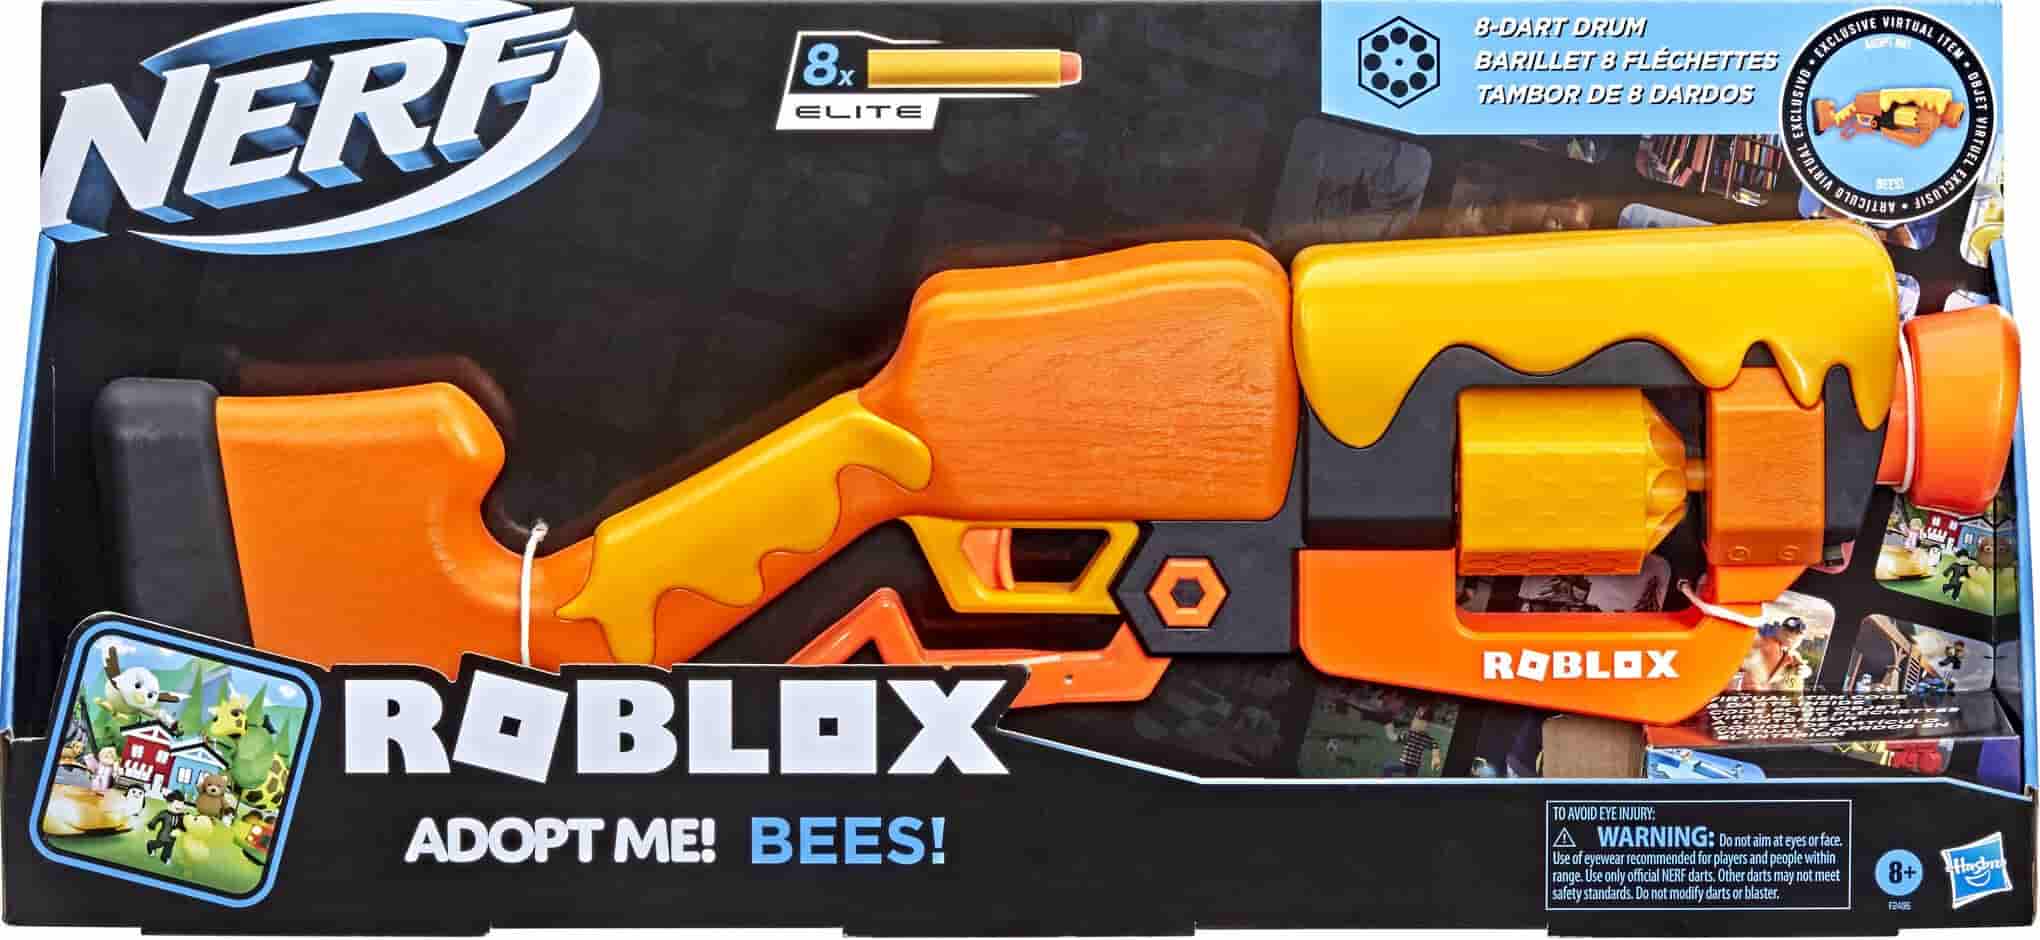 Bee bee gun amazon